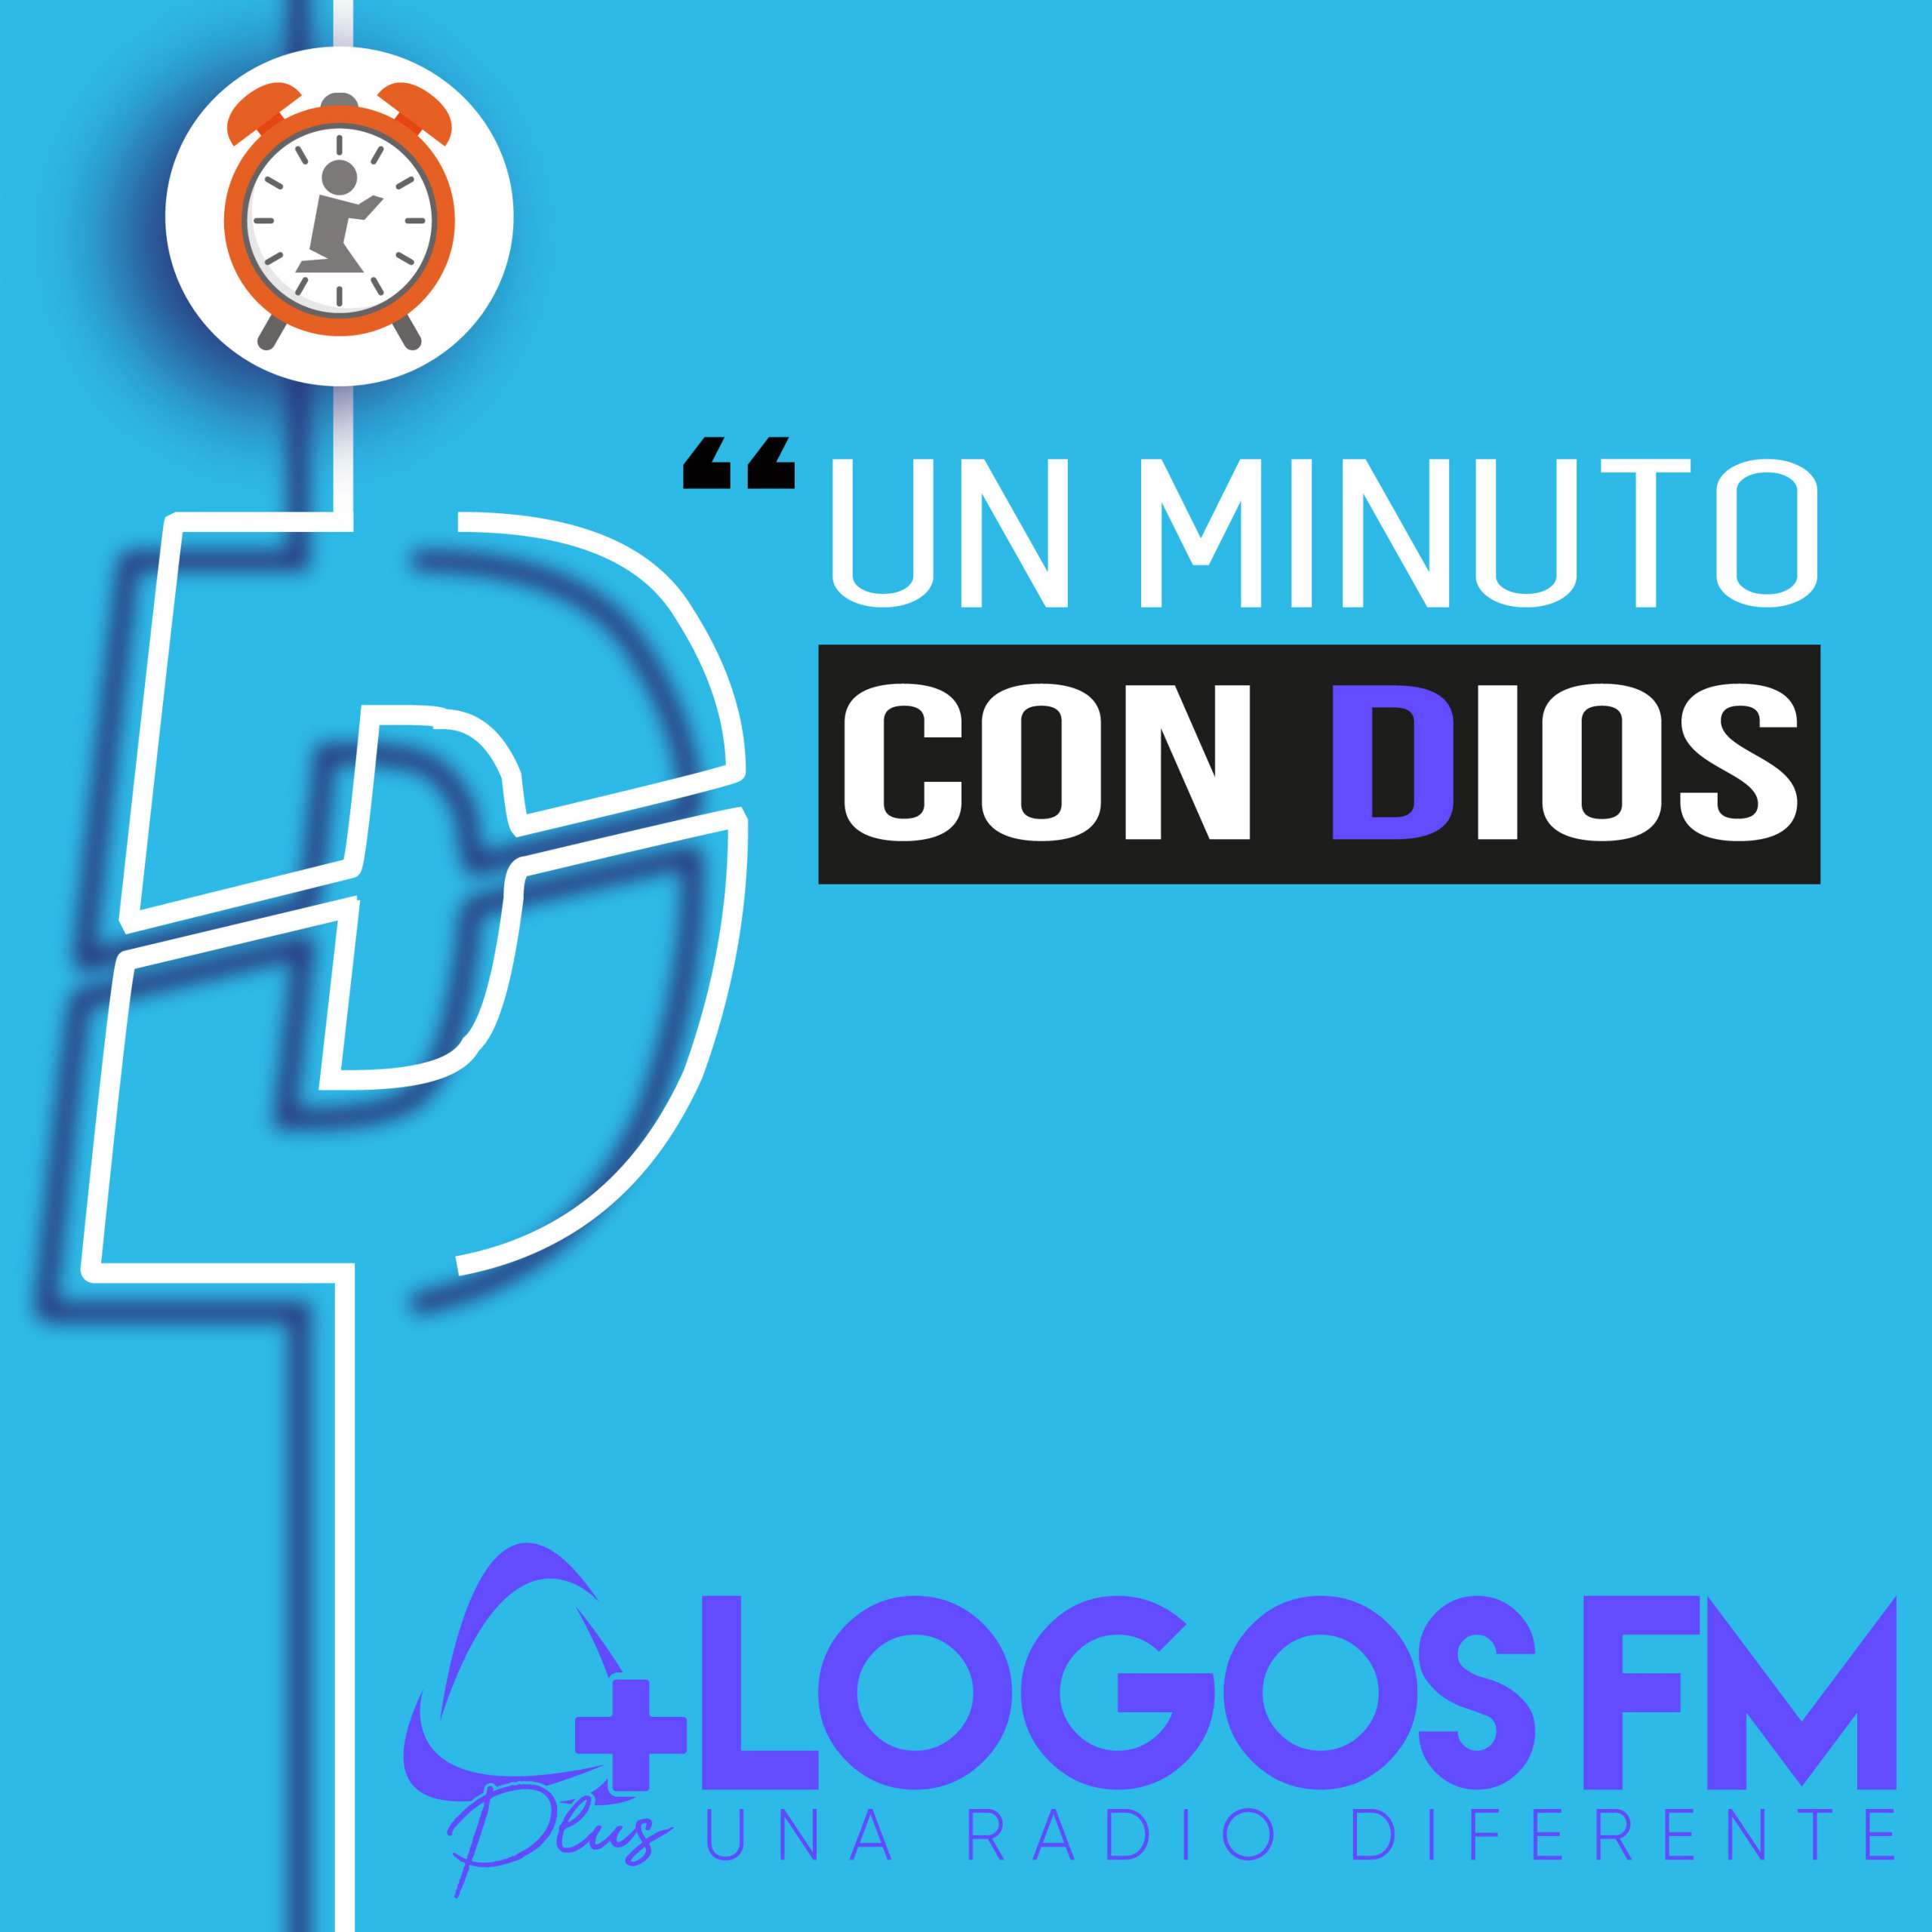 Un minuto con Dios - Episodio 435 - Loida Vargas